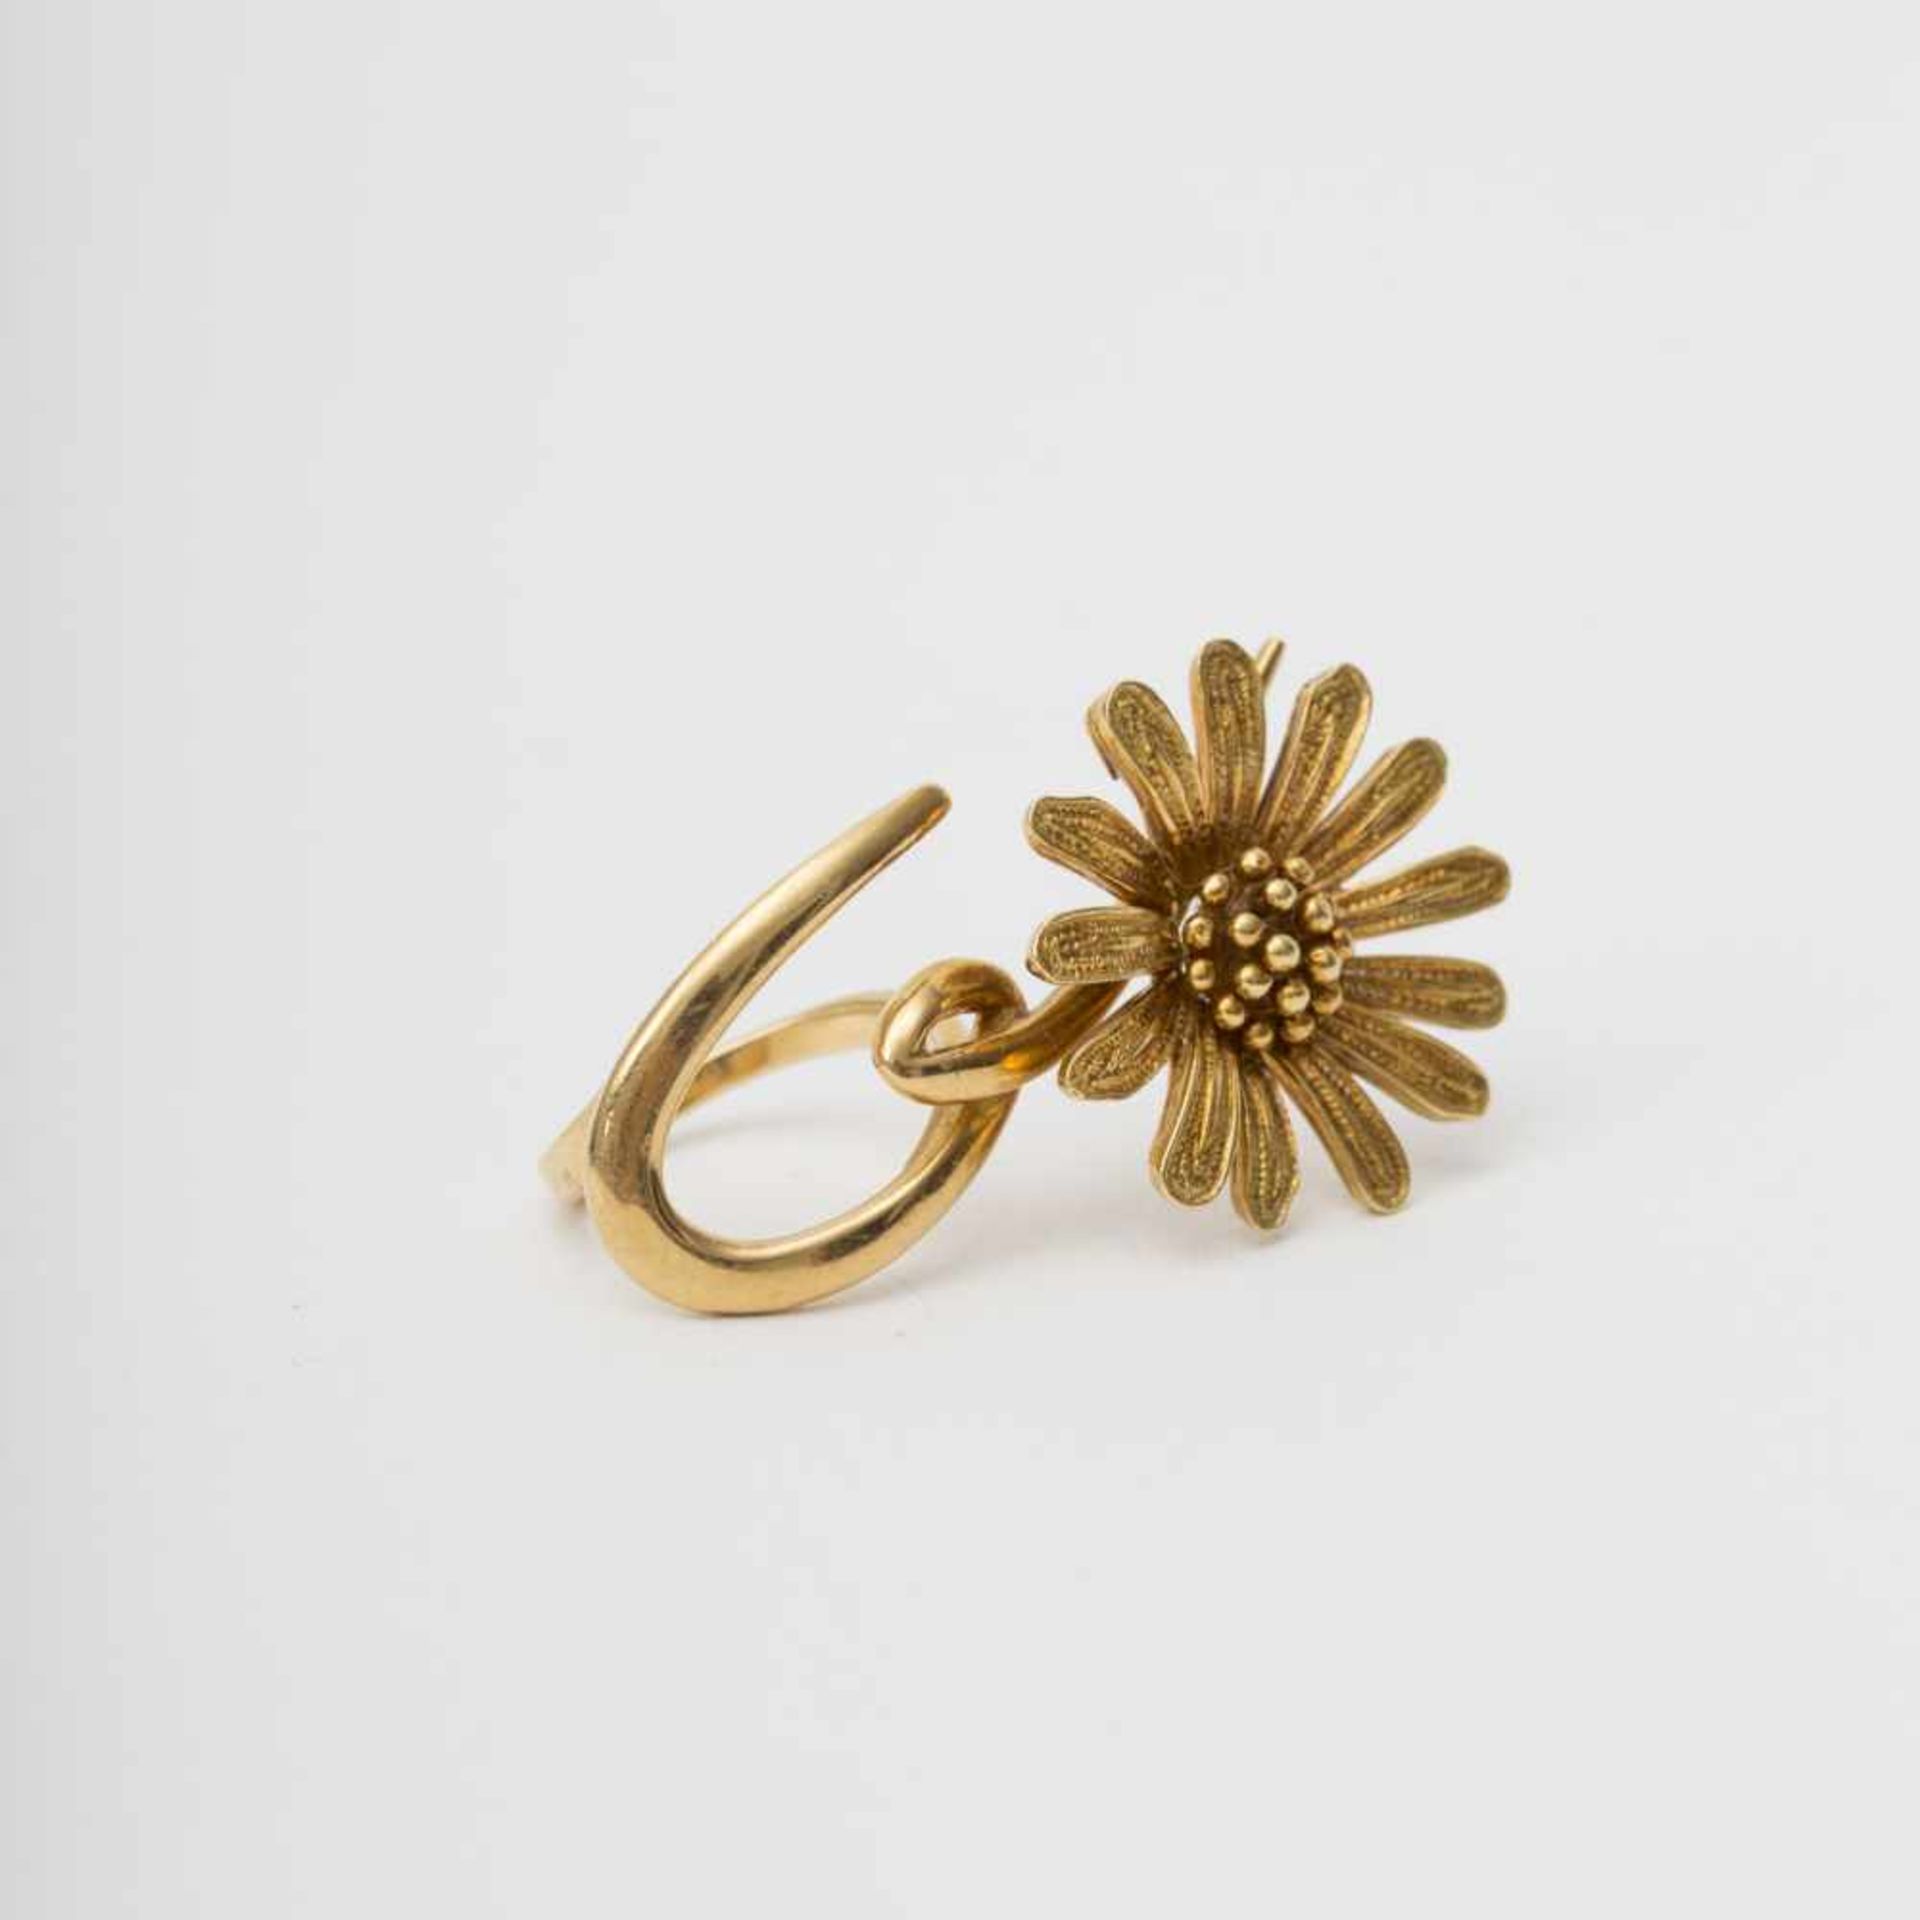 Daisy ring 18K yellow gold depicting a daisy. It straddles two fingers. Hallmark: 750. Italian work.